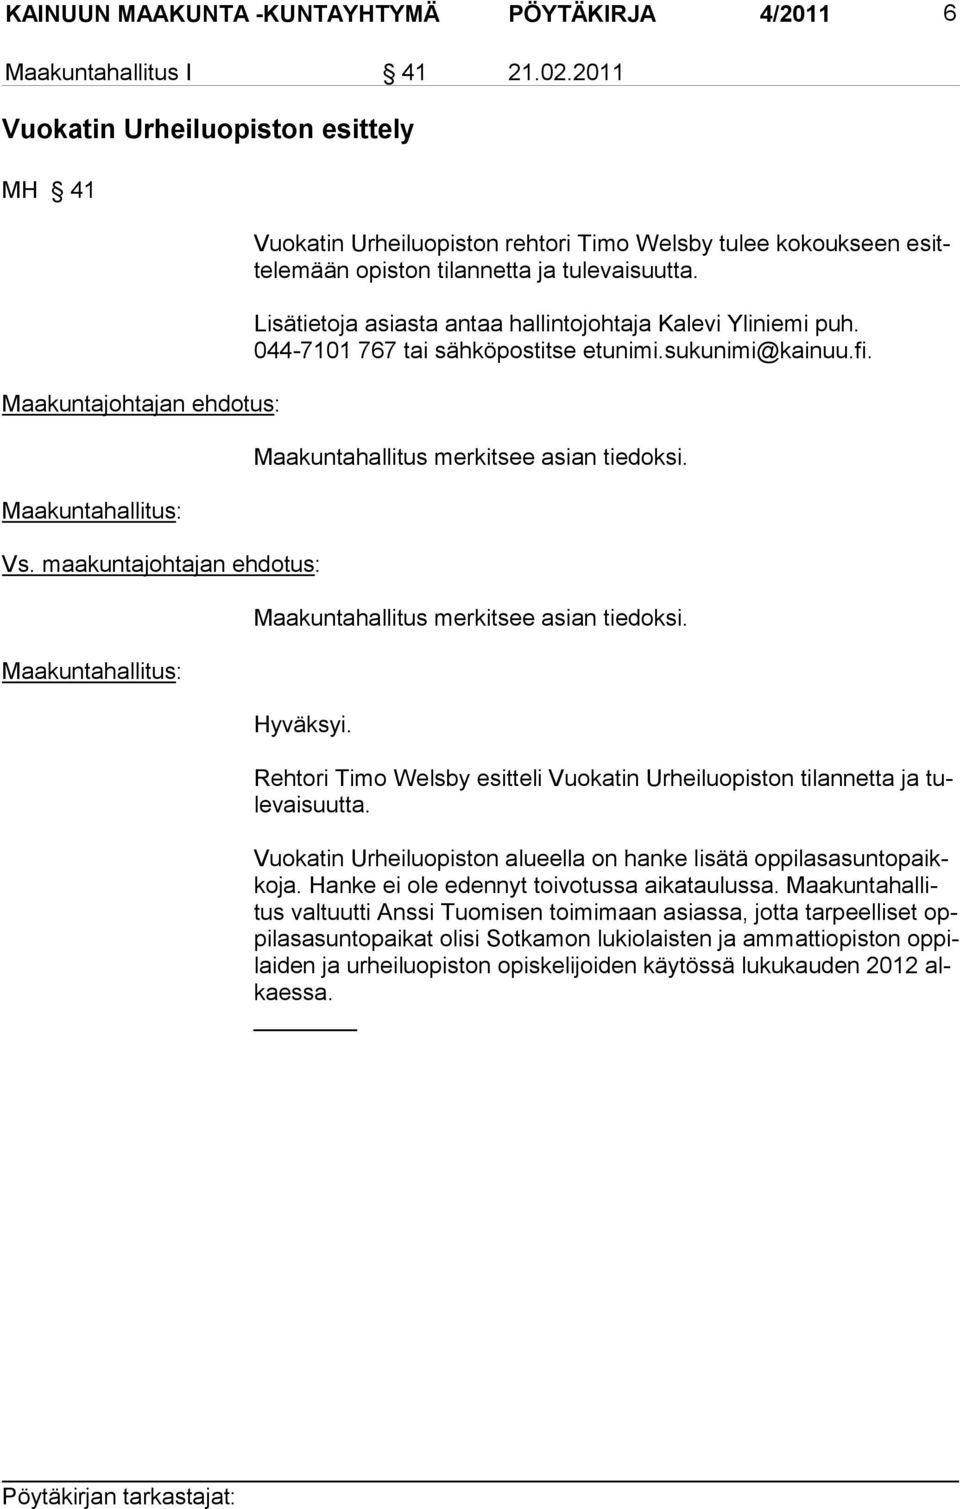 044-7101 767 tai sähköpostitse etunimi.sukunimi@kainuu.fi. Maakuntahallitus merkitsee asian tiedoksi. Maakuntahallitus merkitsee asian tiedoksi. Hyväksyi.